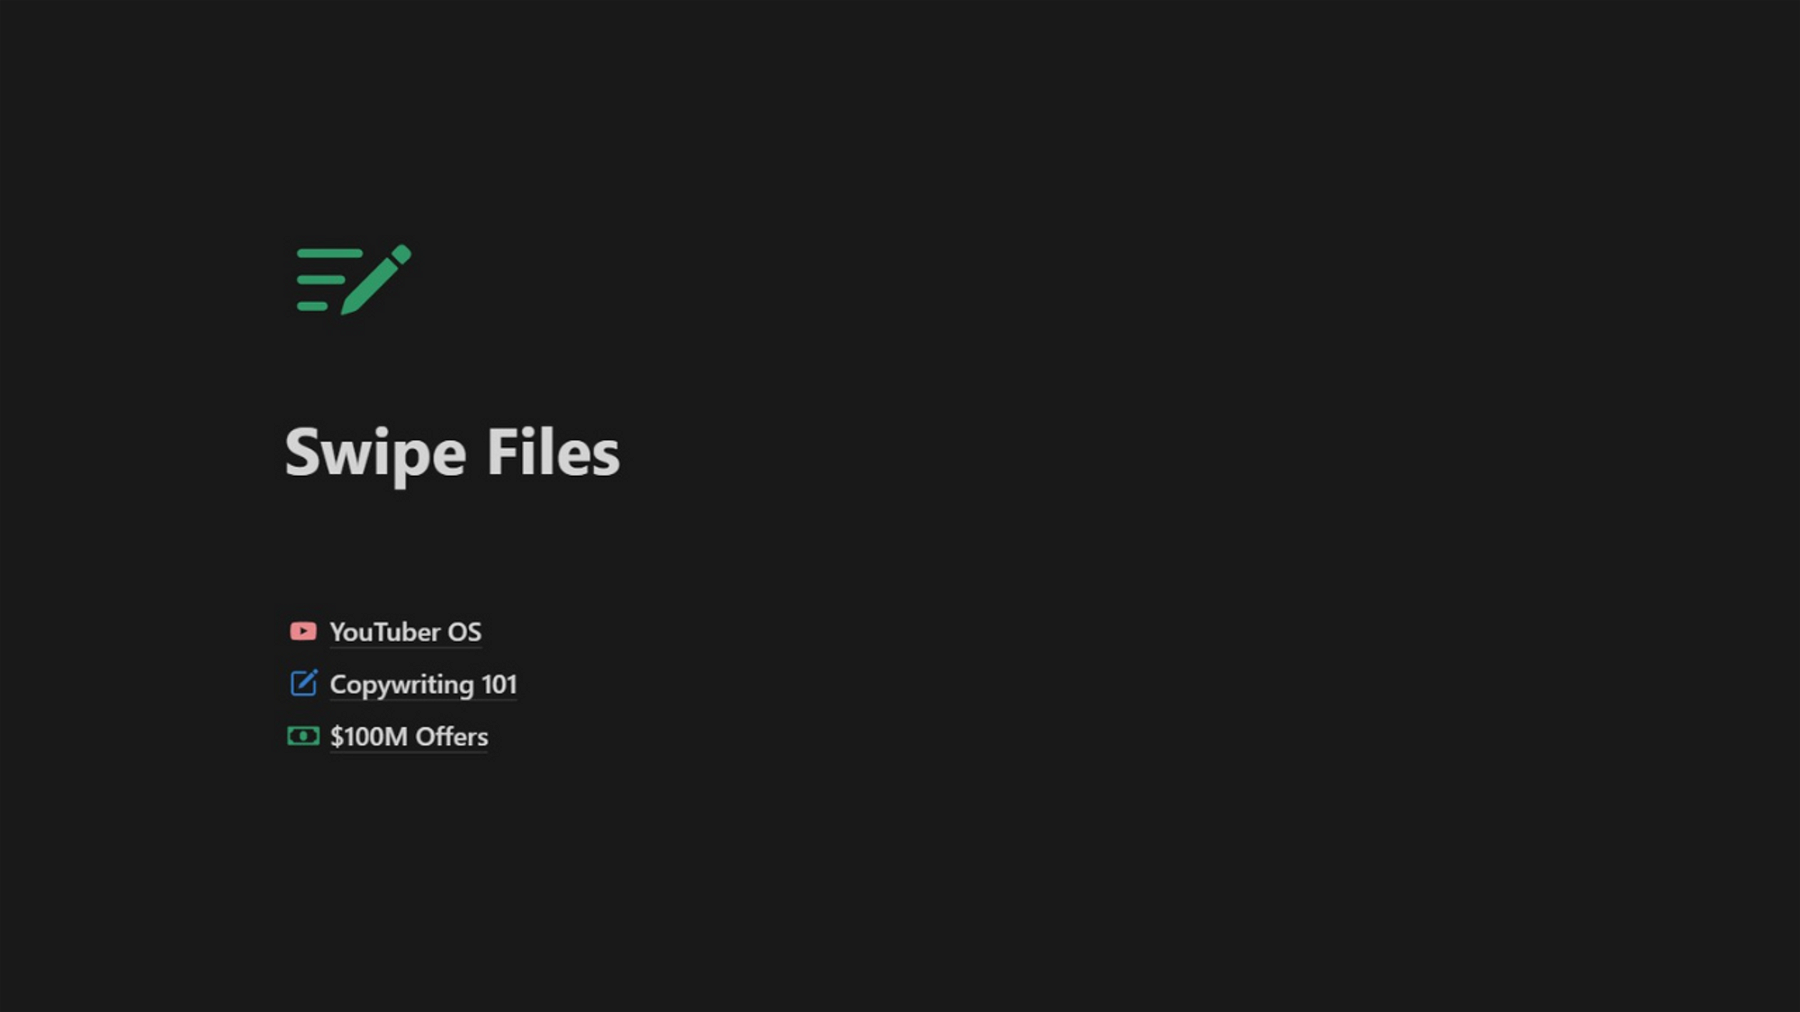 Swipe Files